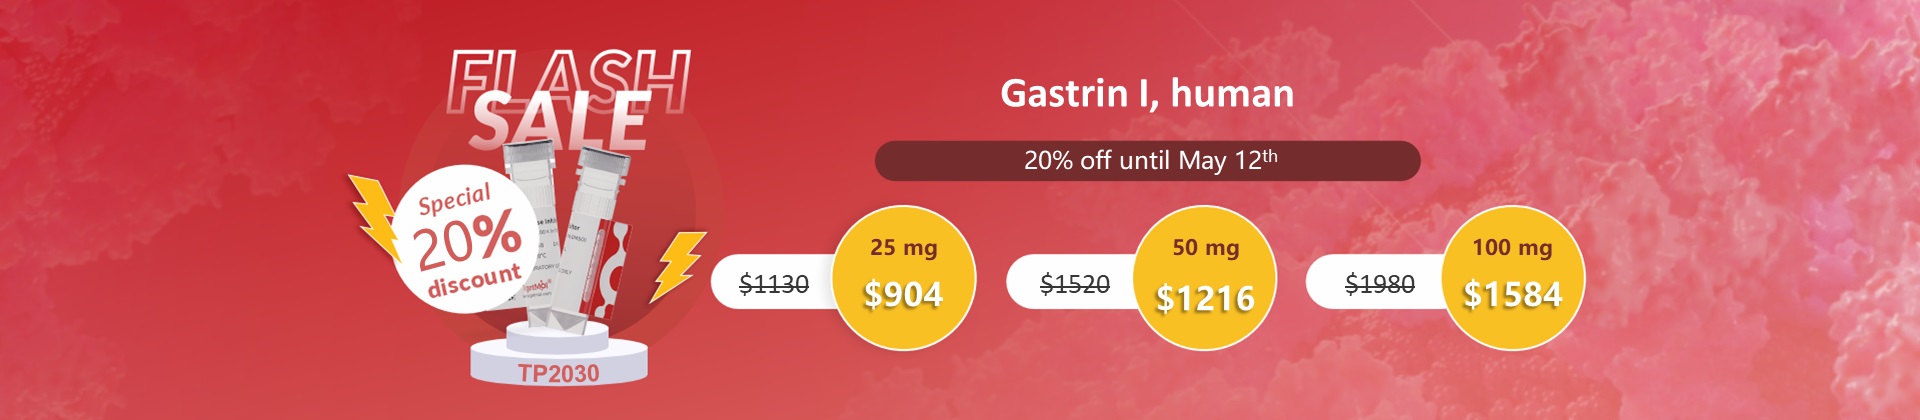 Gastrin I, human 80% discount